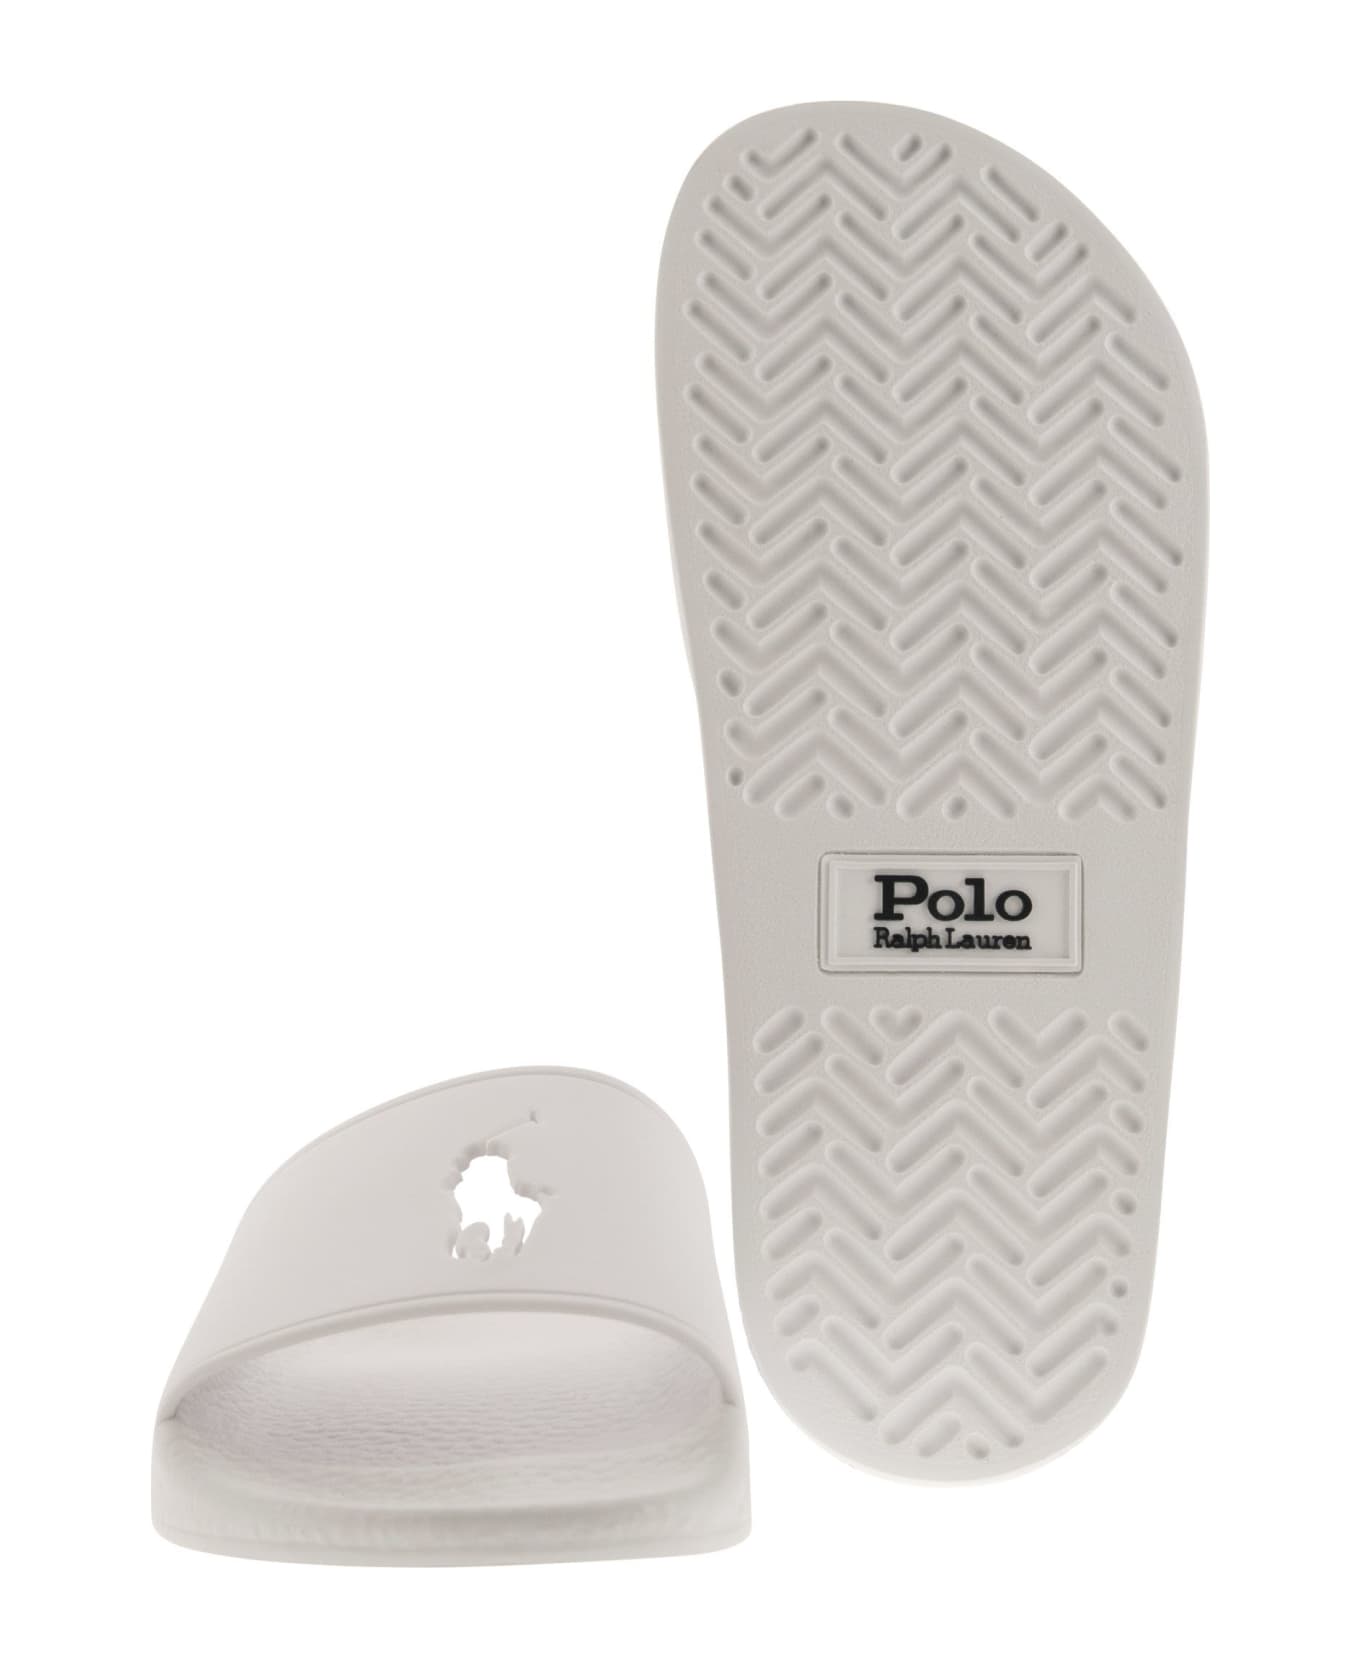 Polo Ralph Lauren Big Pony Slippers - White サンダル